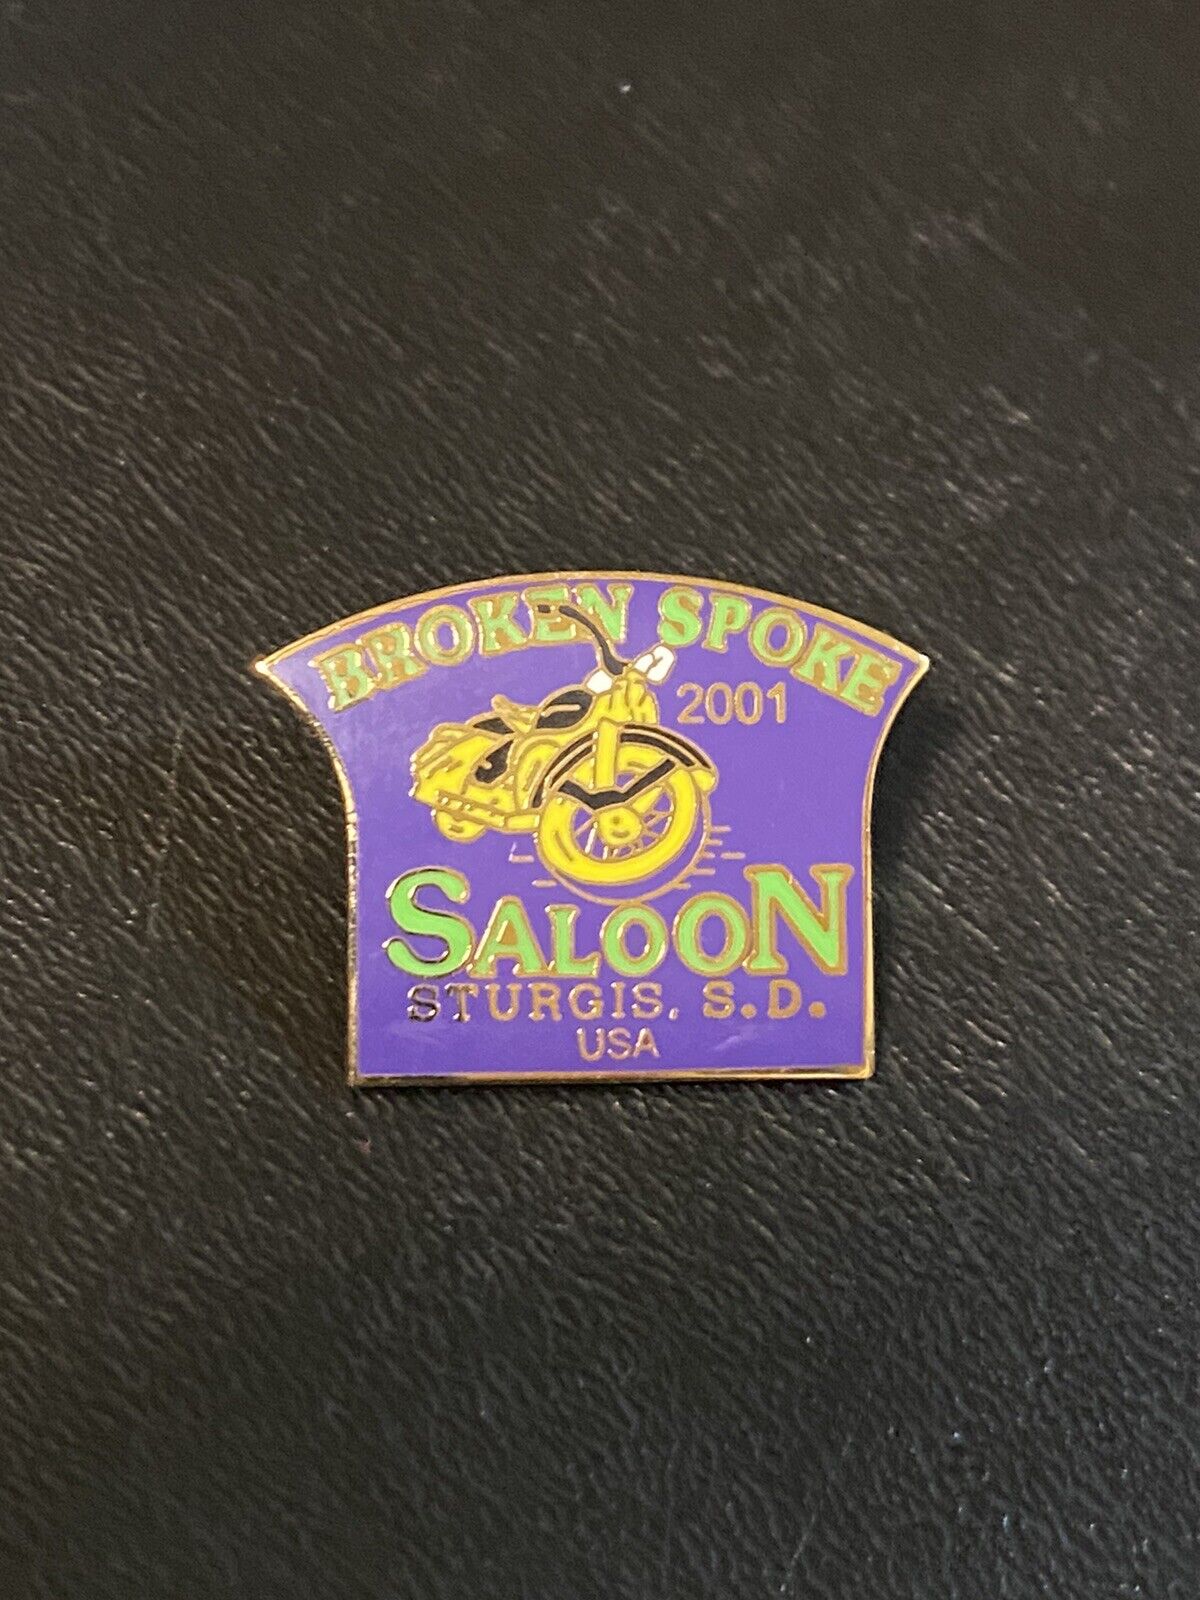 2001 Broken Spoke Saloon Sturgis South Dakota Screw Back Collectors Pin